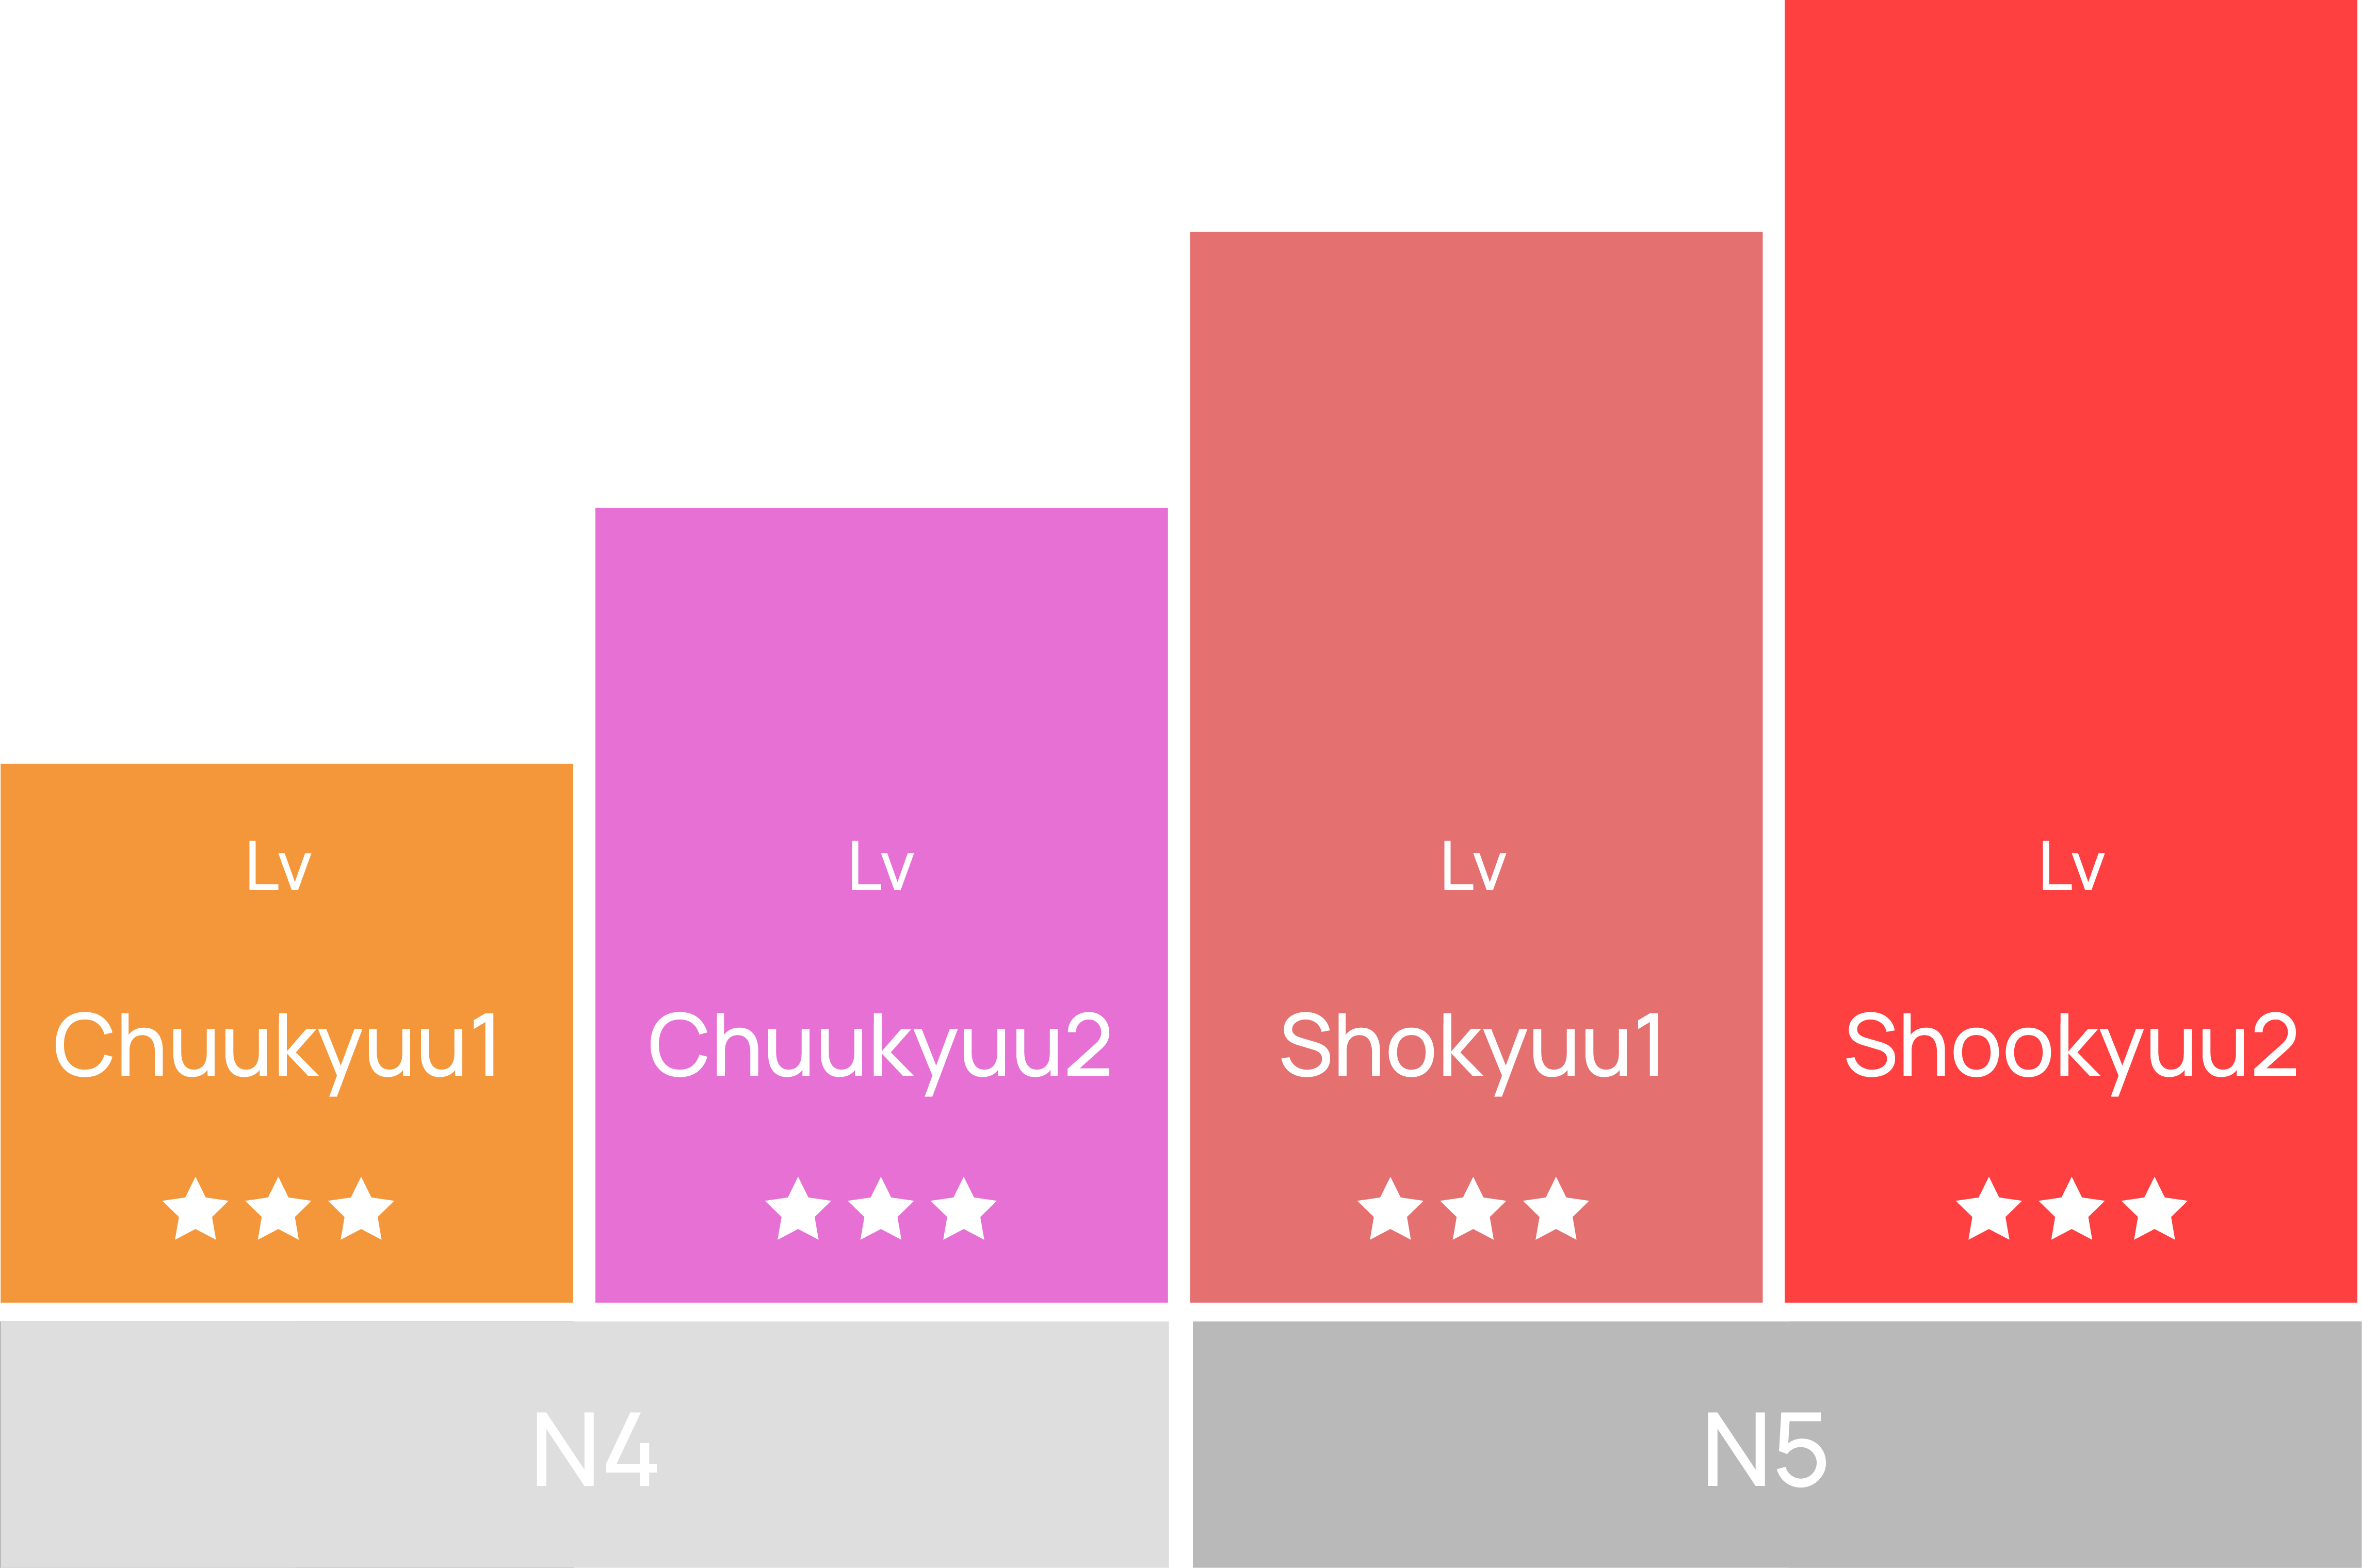 Tingkatan Level Kursus Bahasa Jepang General (Age > 15)